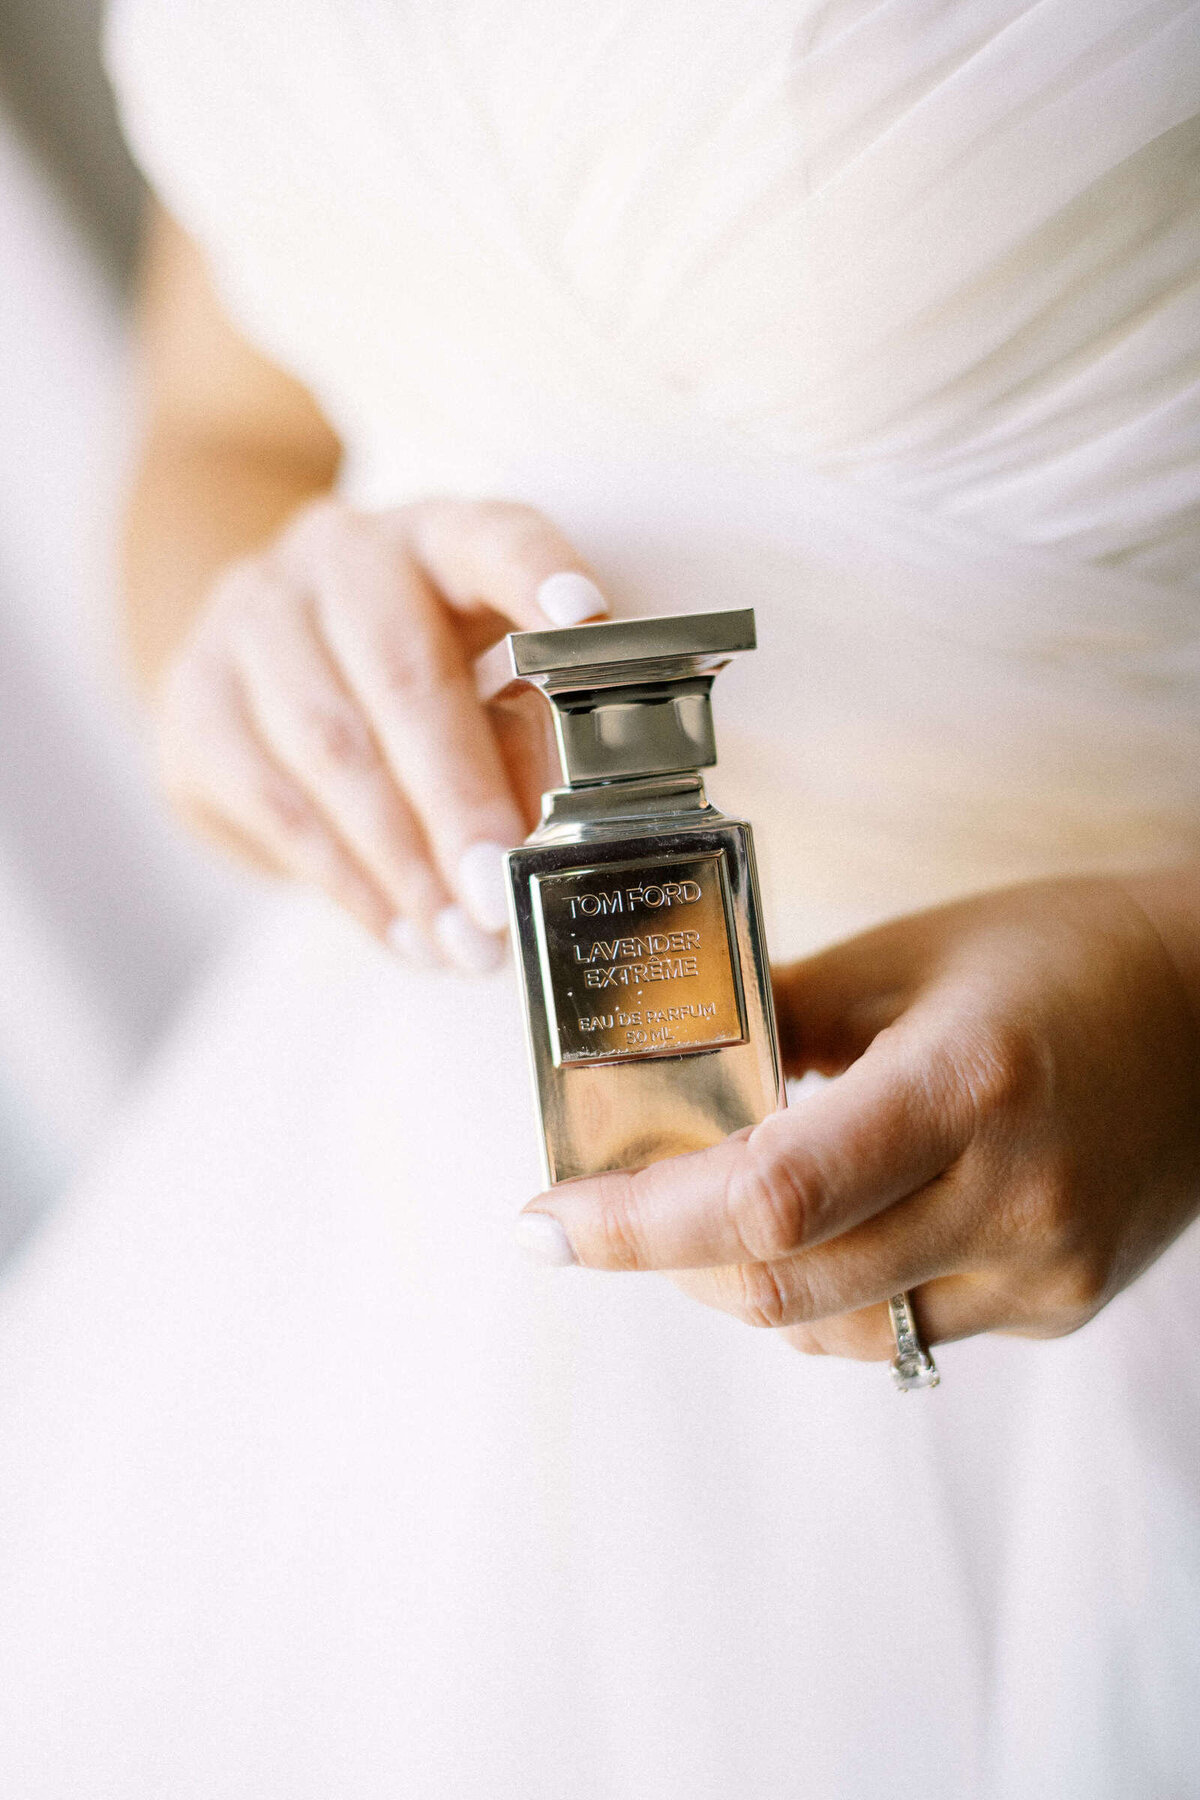 Bride holds up Tom Ford wedding perfume bottle